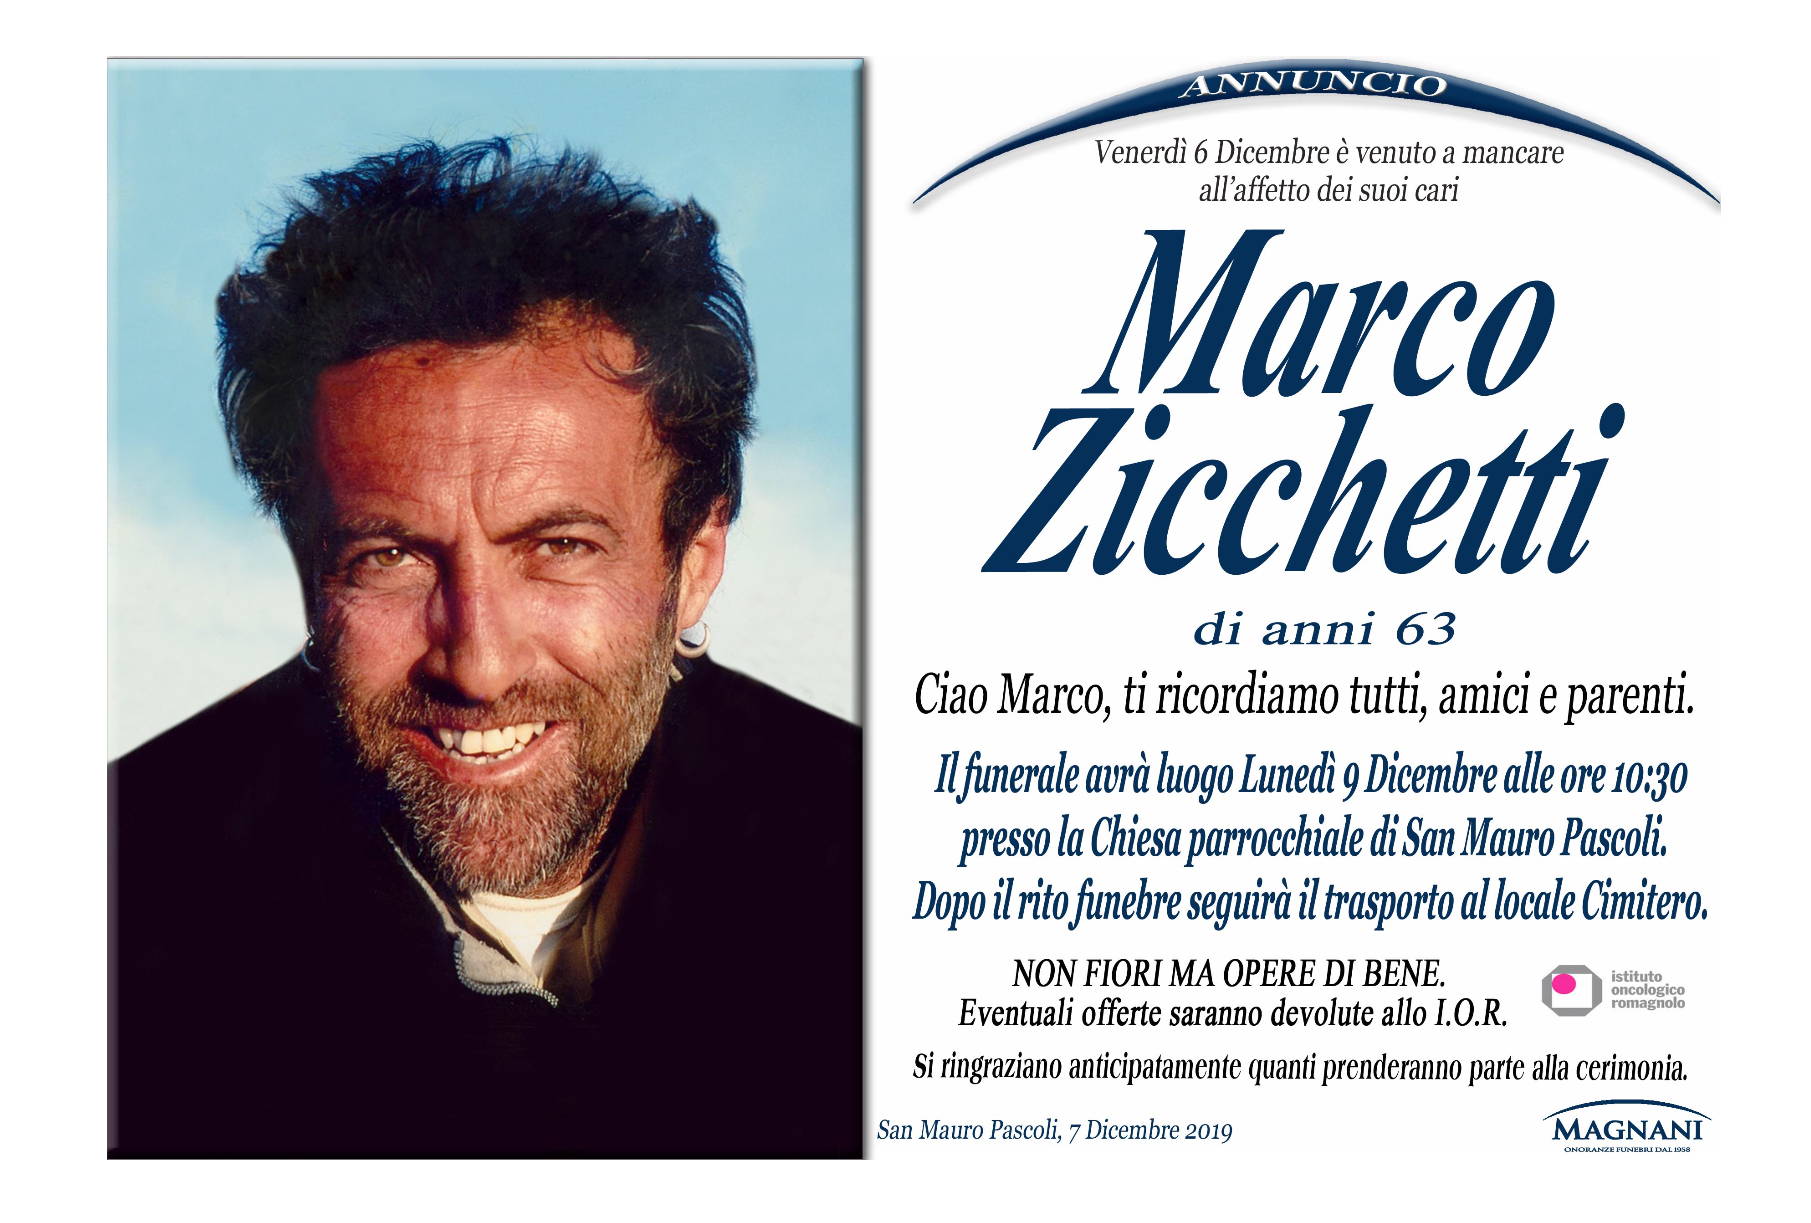 Marco Zicchetti